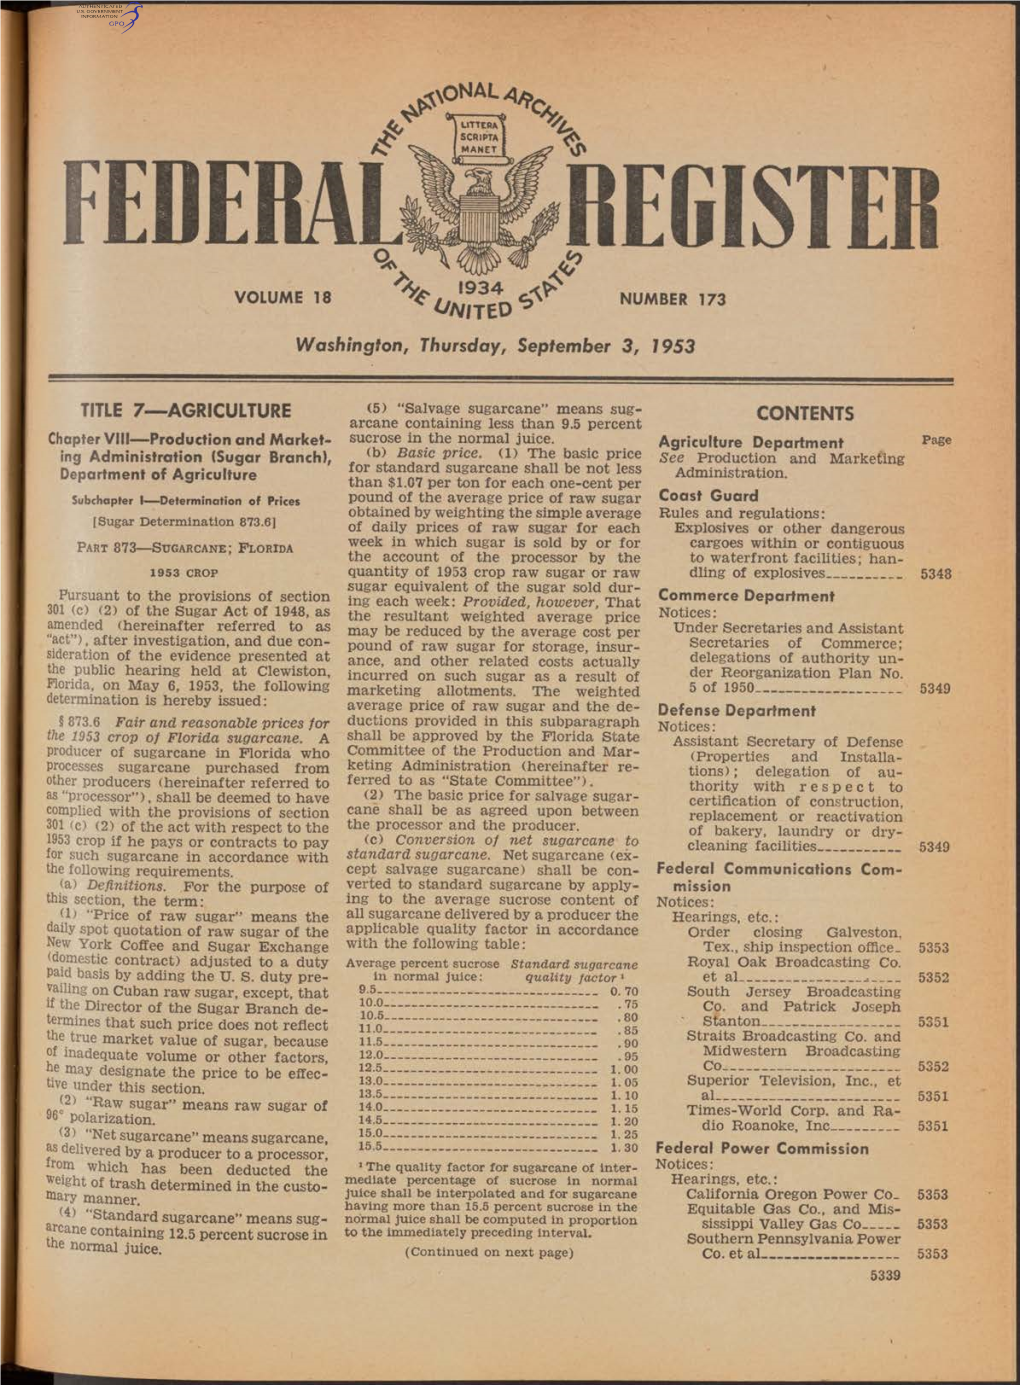 EBERAL REGISTER " " V ' ^ a 1934 ^ VOLUME 18 \ NUMBER 173 ■ O N Ijlo * Washington, Thursday, September 3, 1953